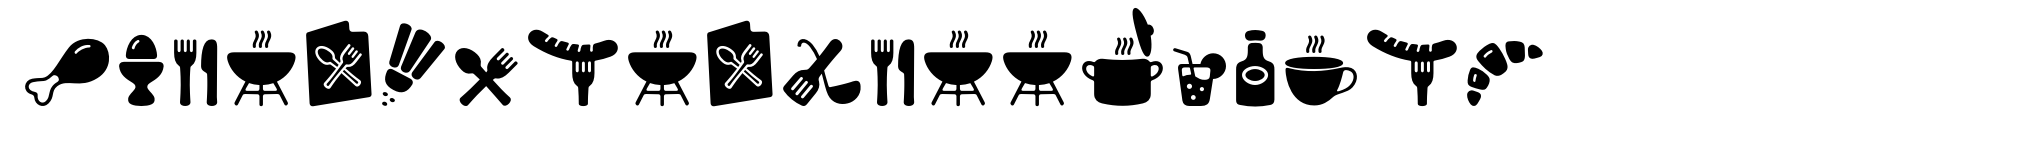 PH Font Icons Food Black image